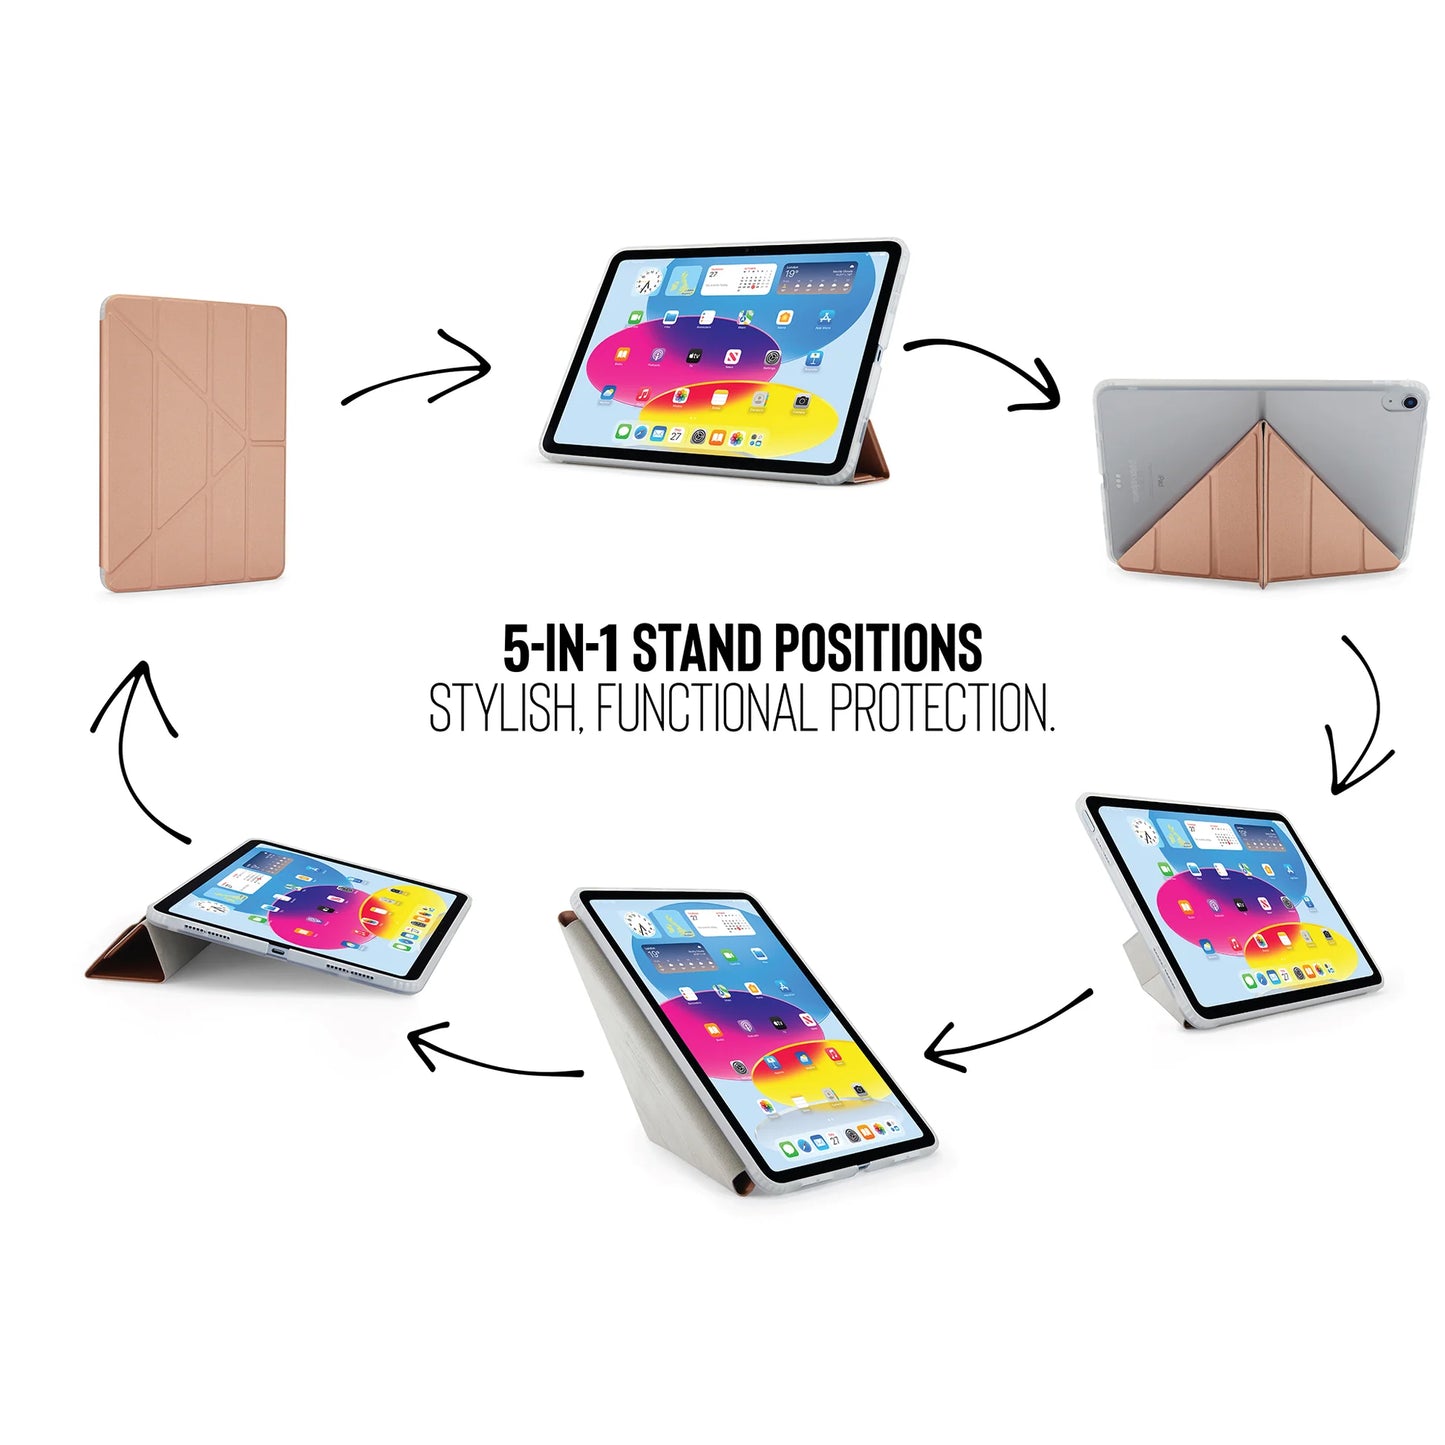 Pipetto Origami Case voor iPad (10e gen.) - Roségoud